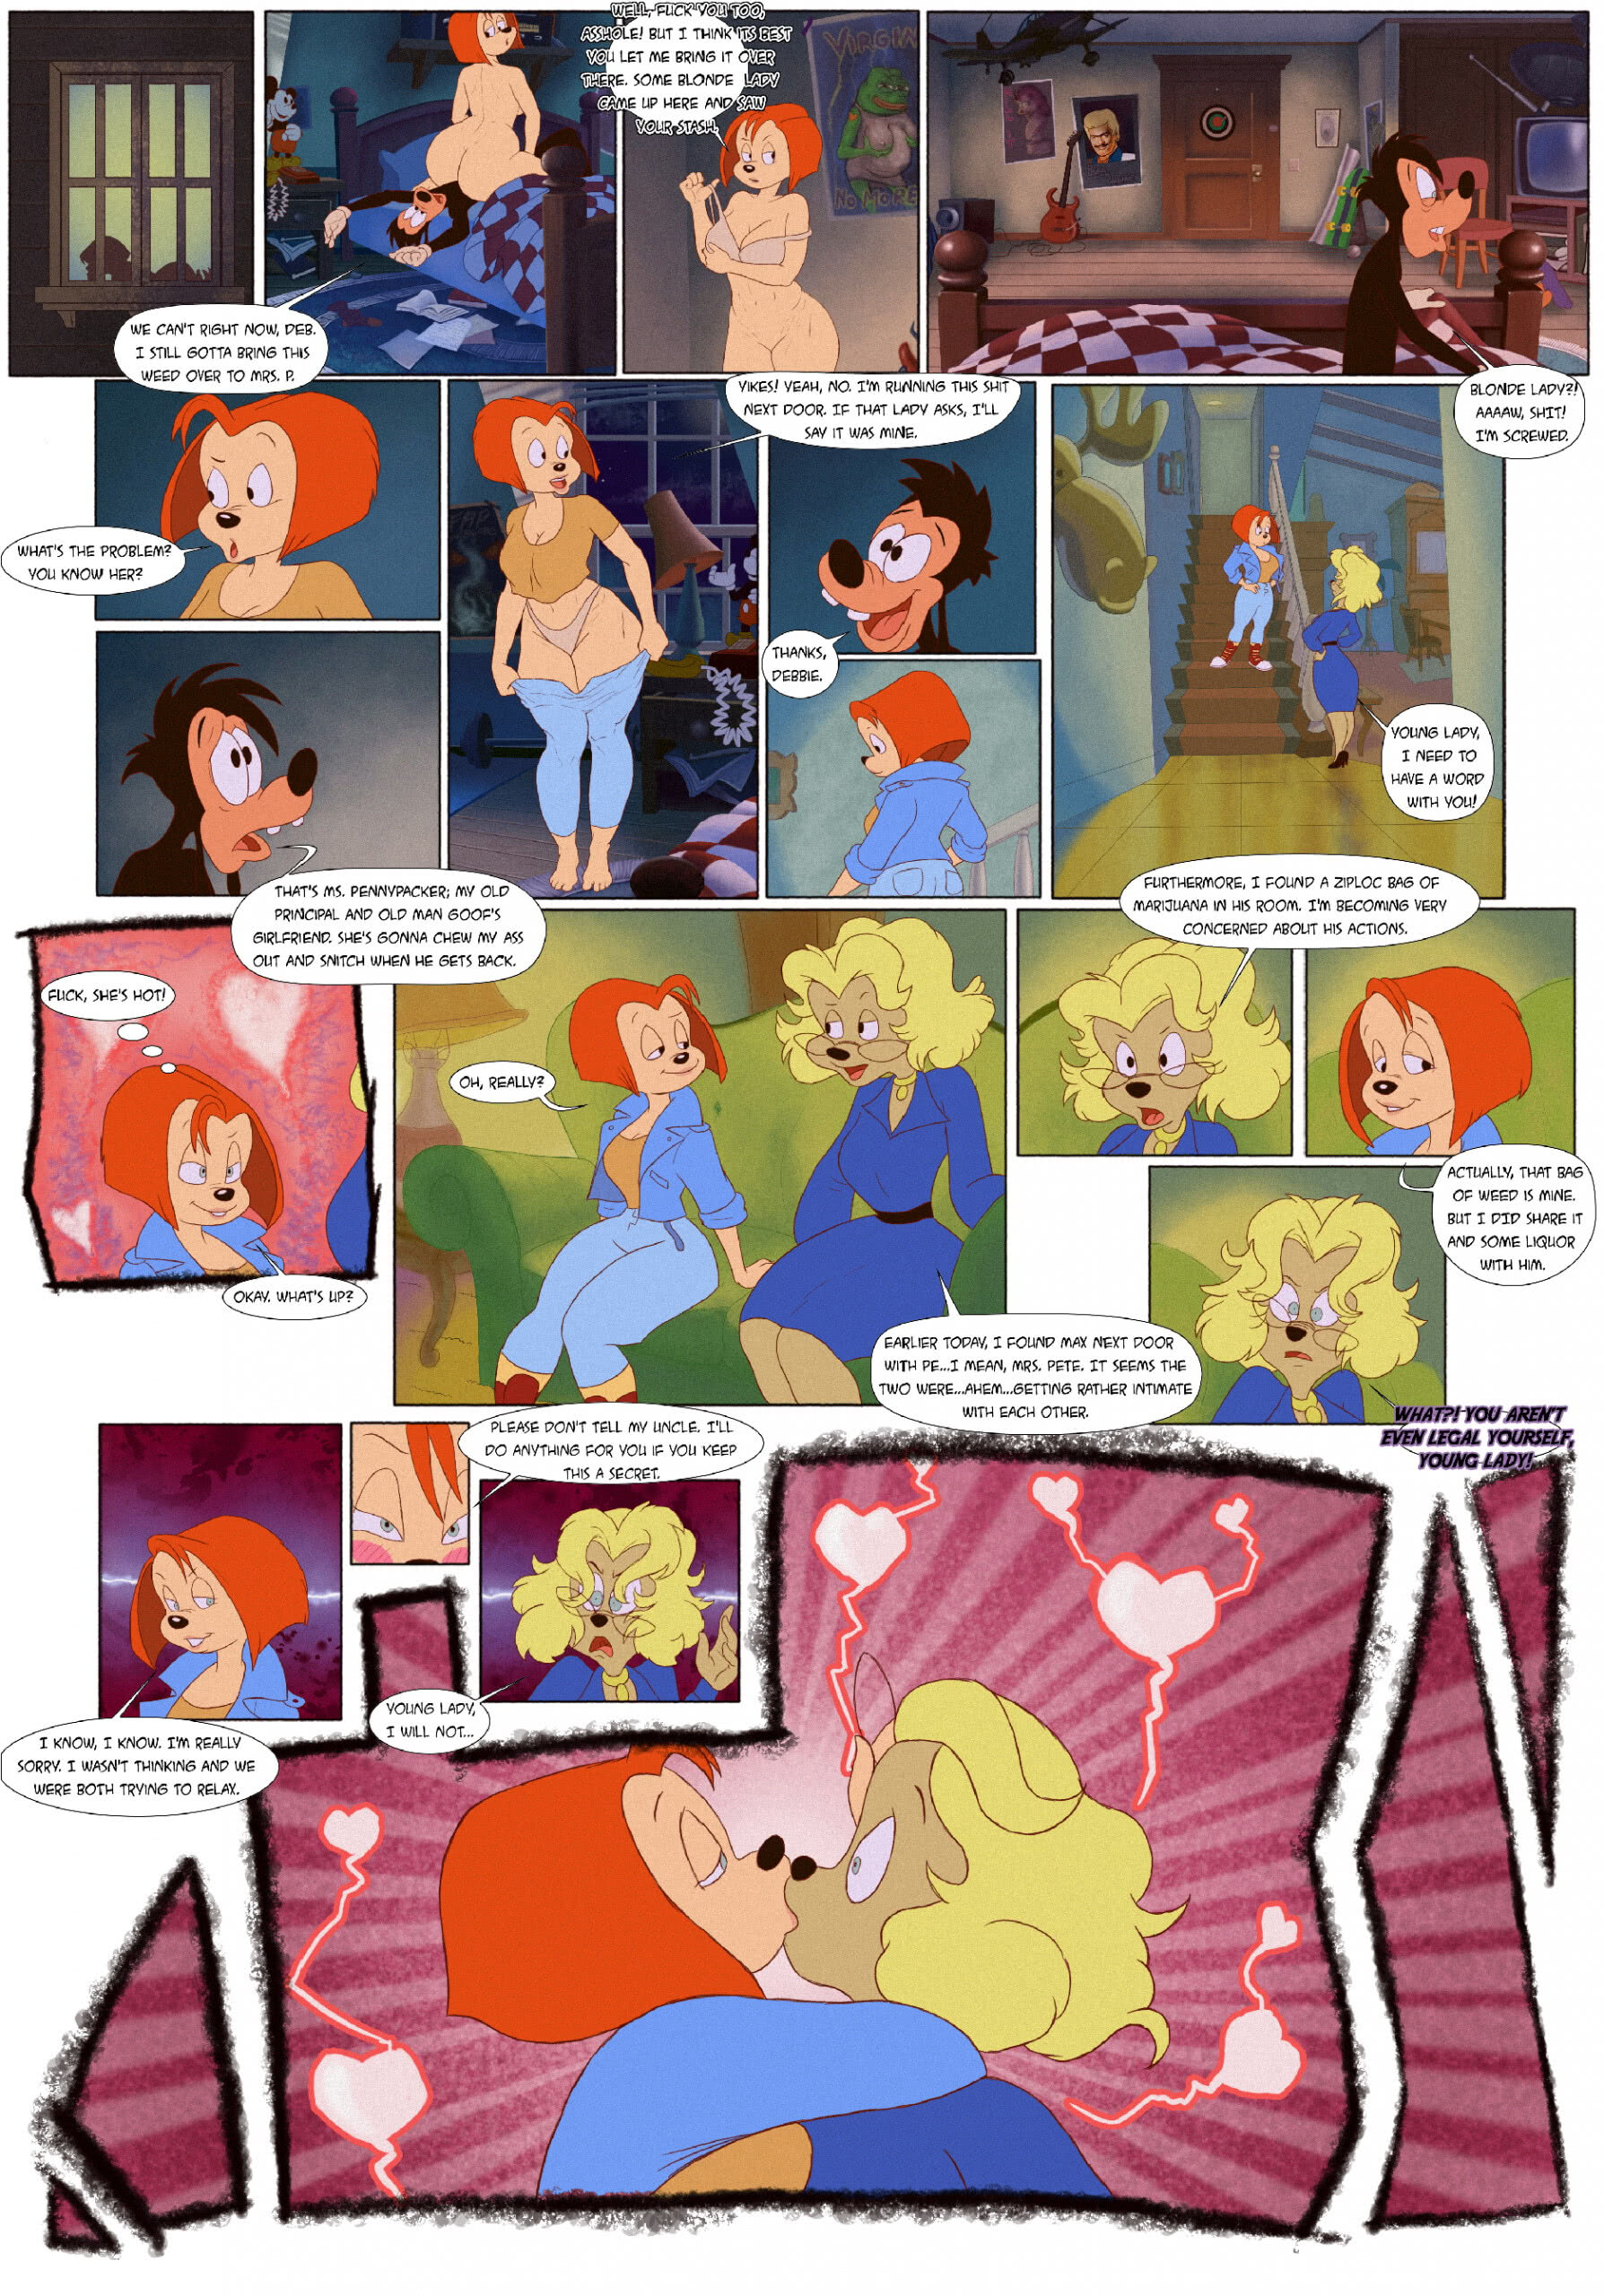 A Goofy porno - Page 12